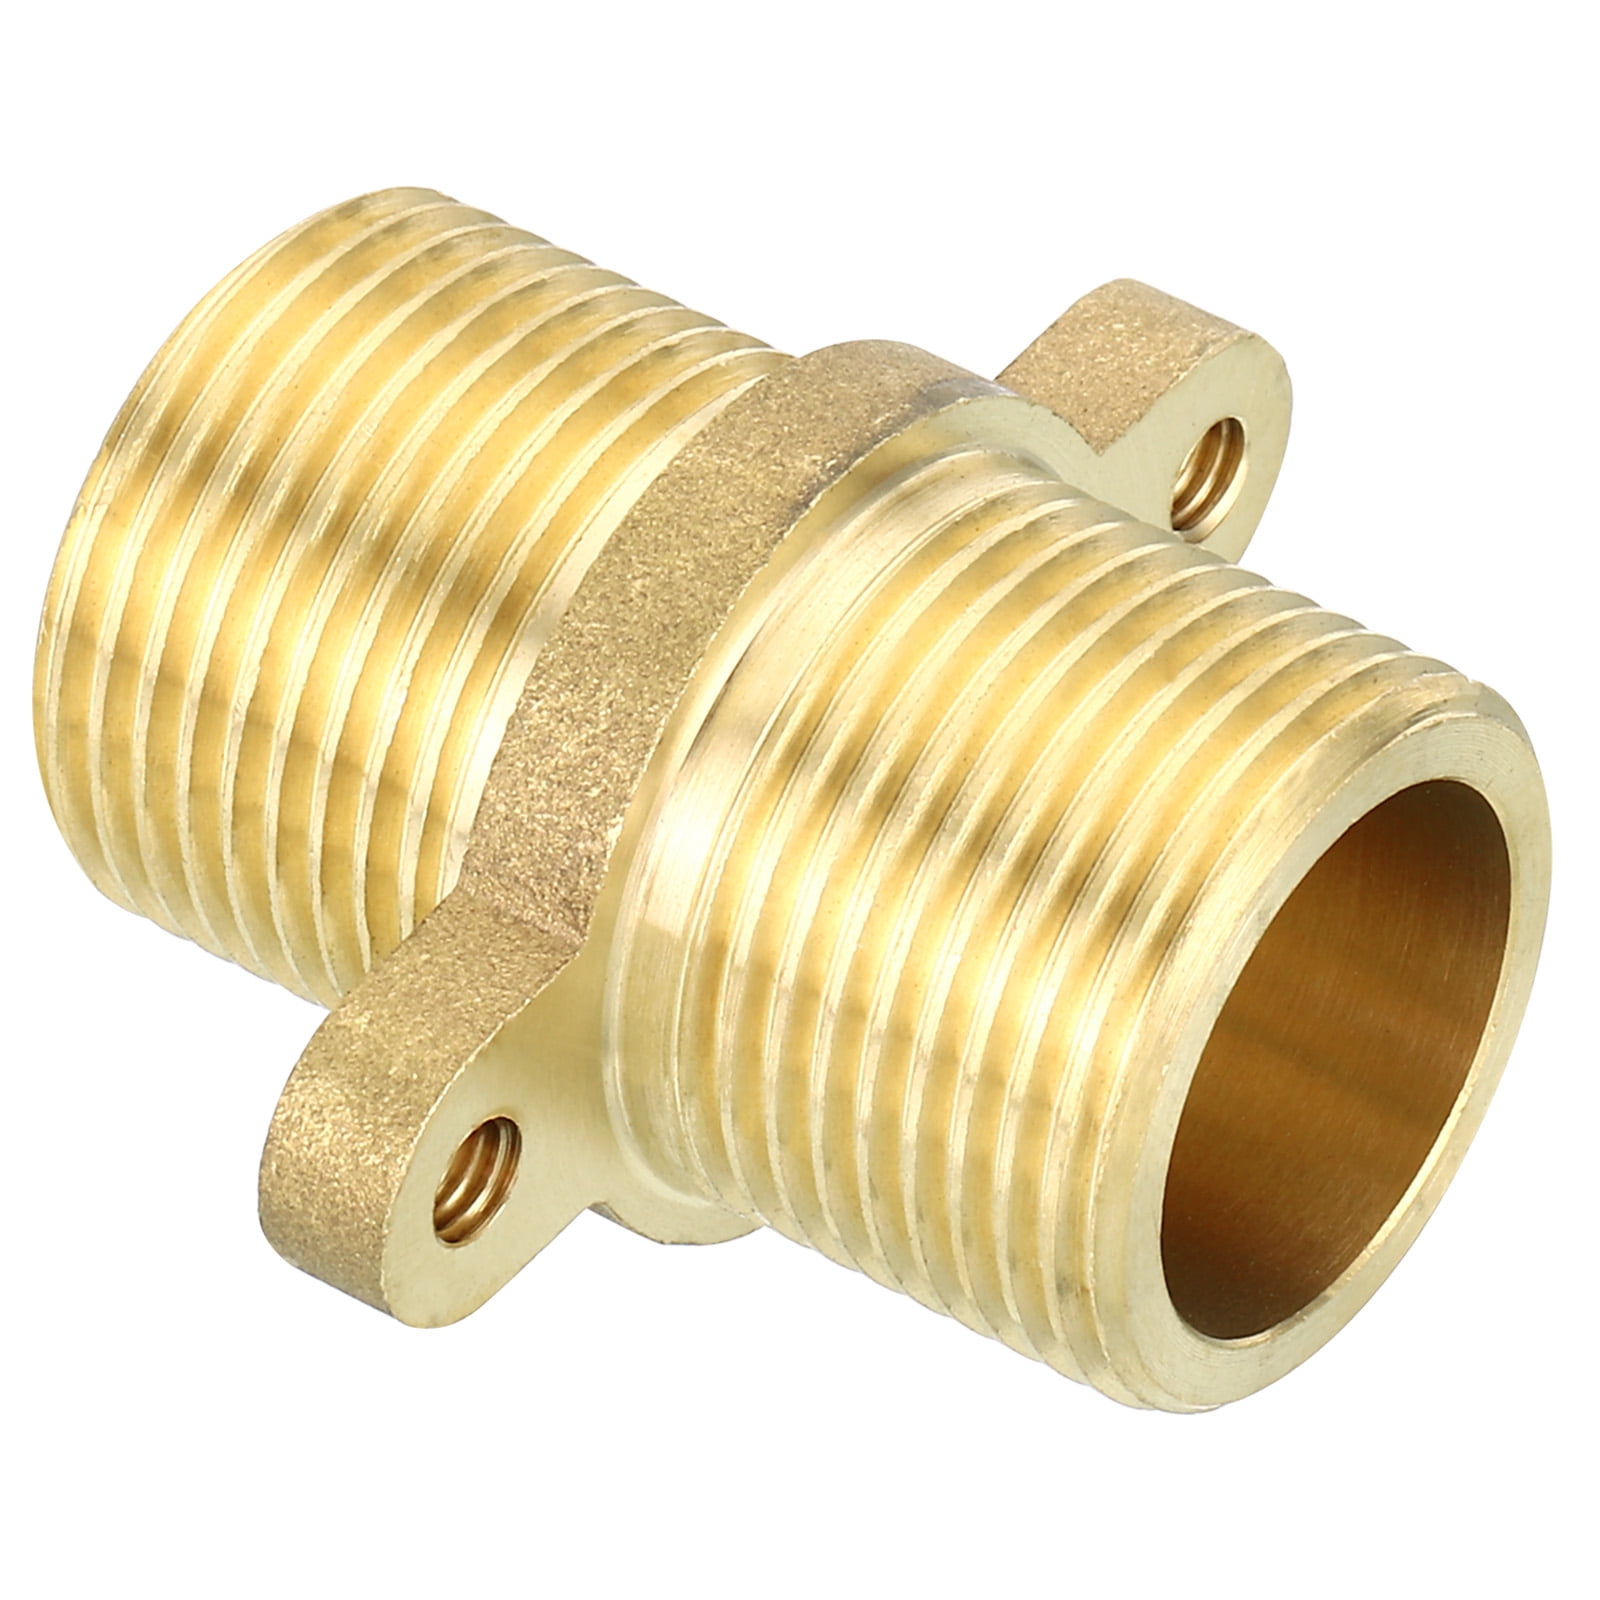 Uxcell 3/4 G x 3/4 G Male Brass Union Connector, 1pcs Drop Ear